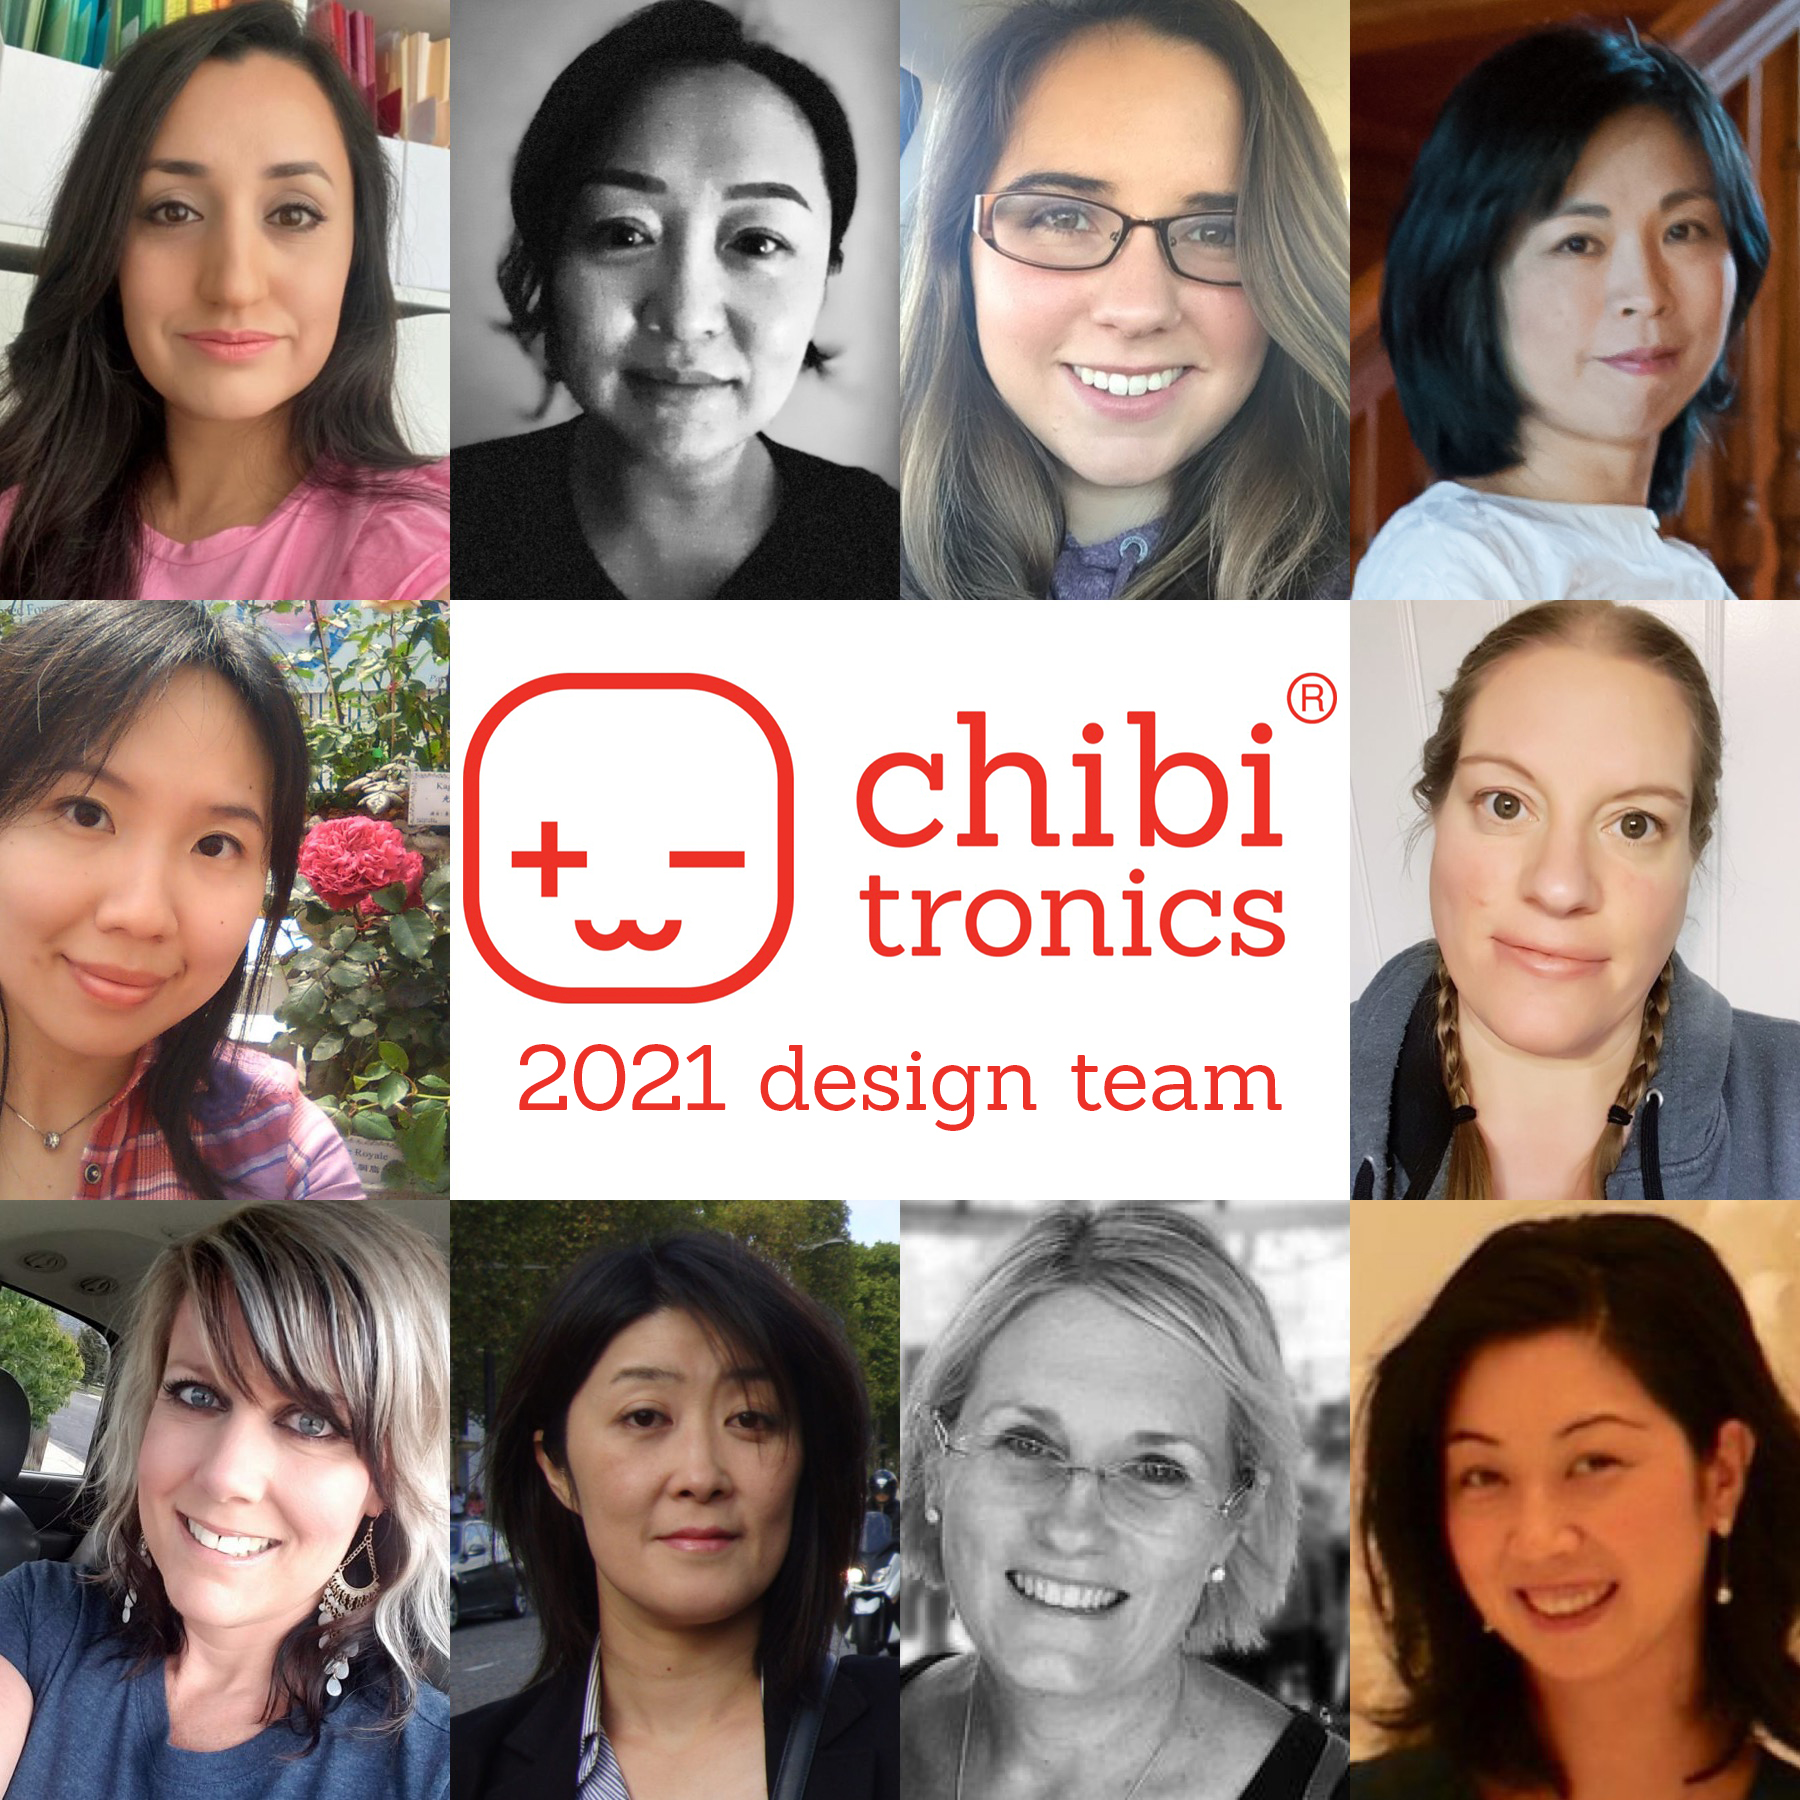 Introducing the 2021 Chibitronics Design Team!